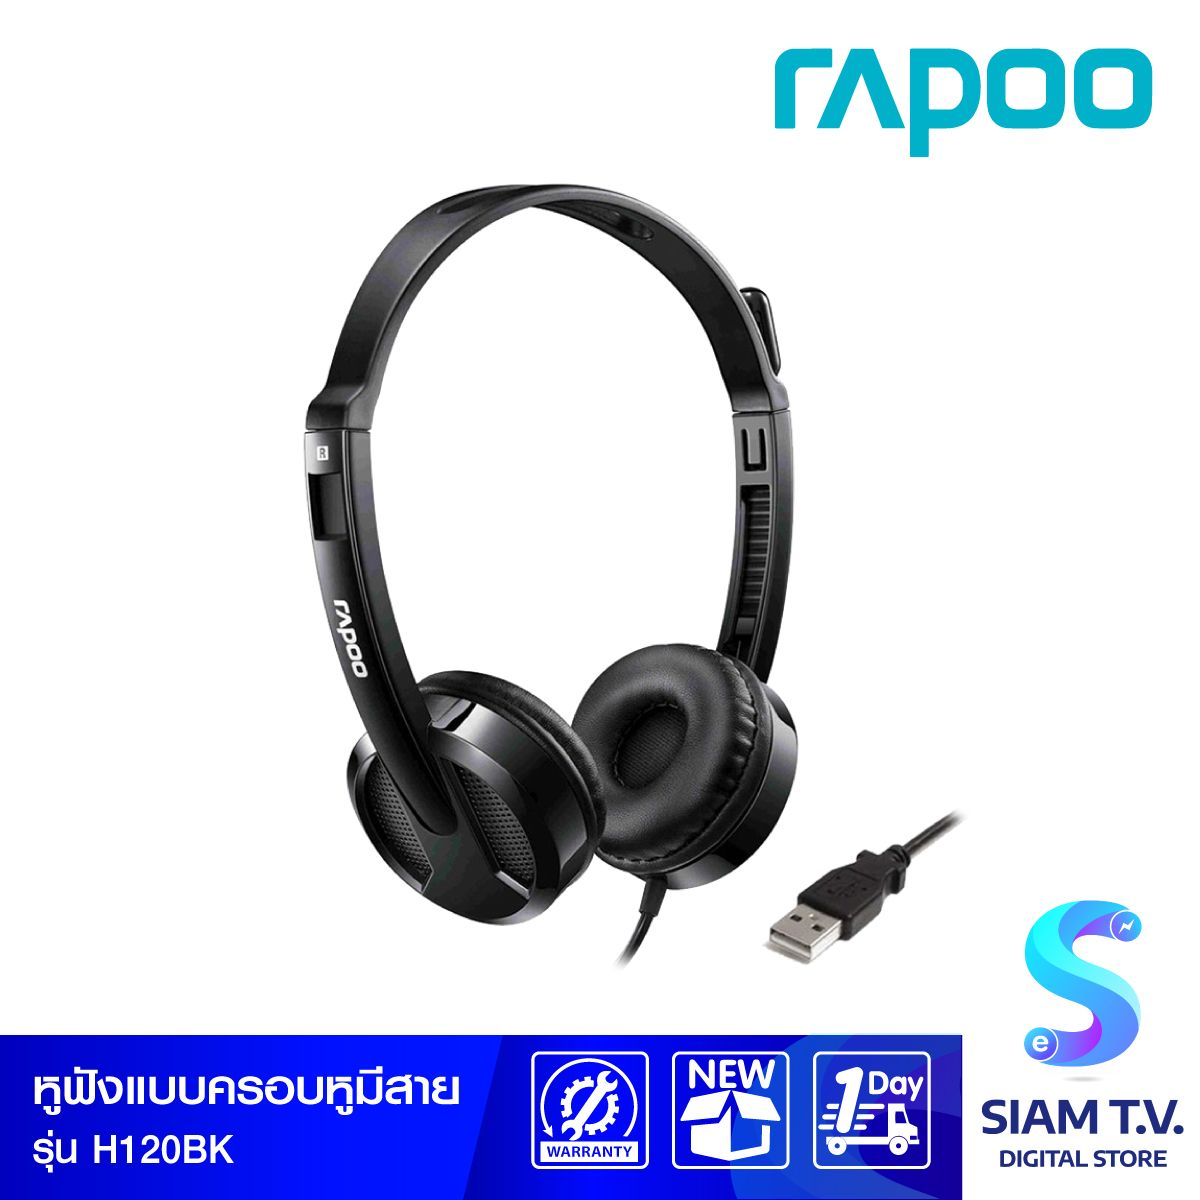 Rapoo USB Stereo Headset  หูฟัง-ไมโครโฟน RAPOO สีBLACK